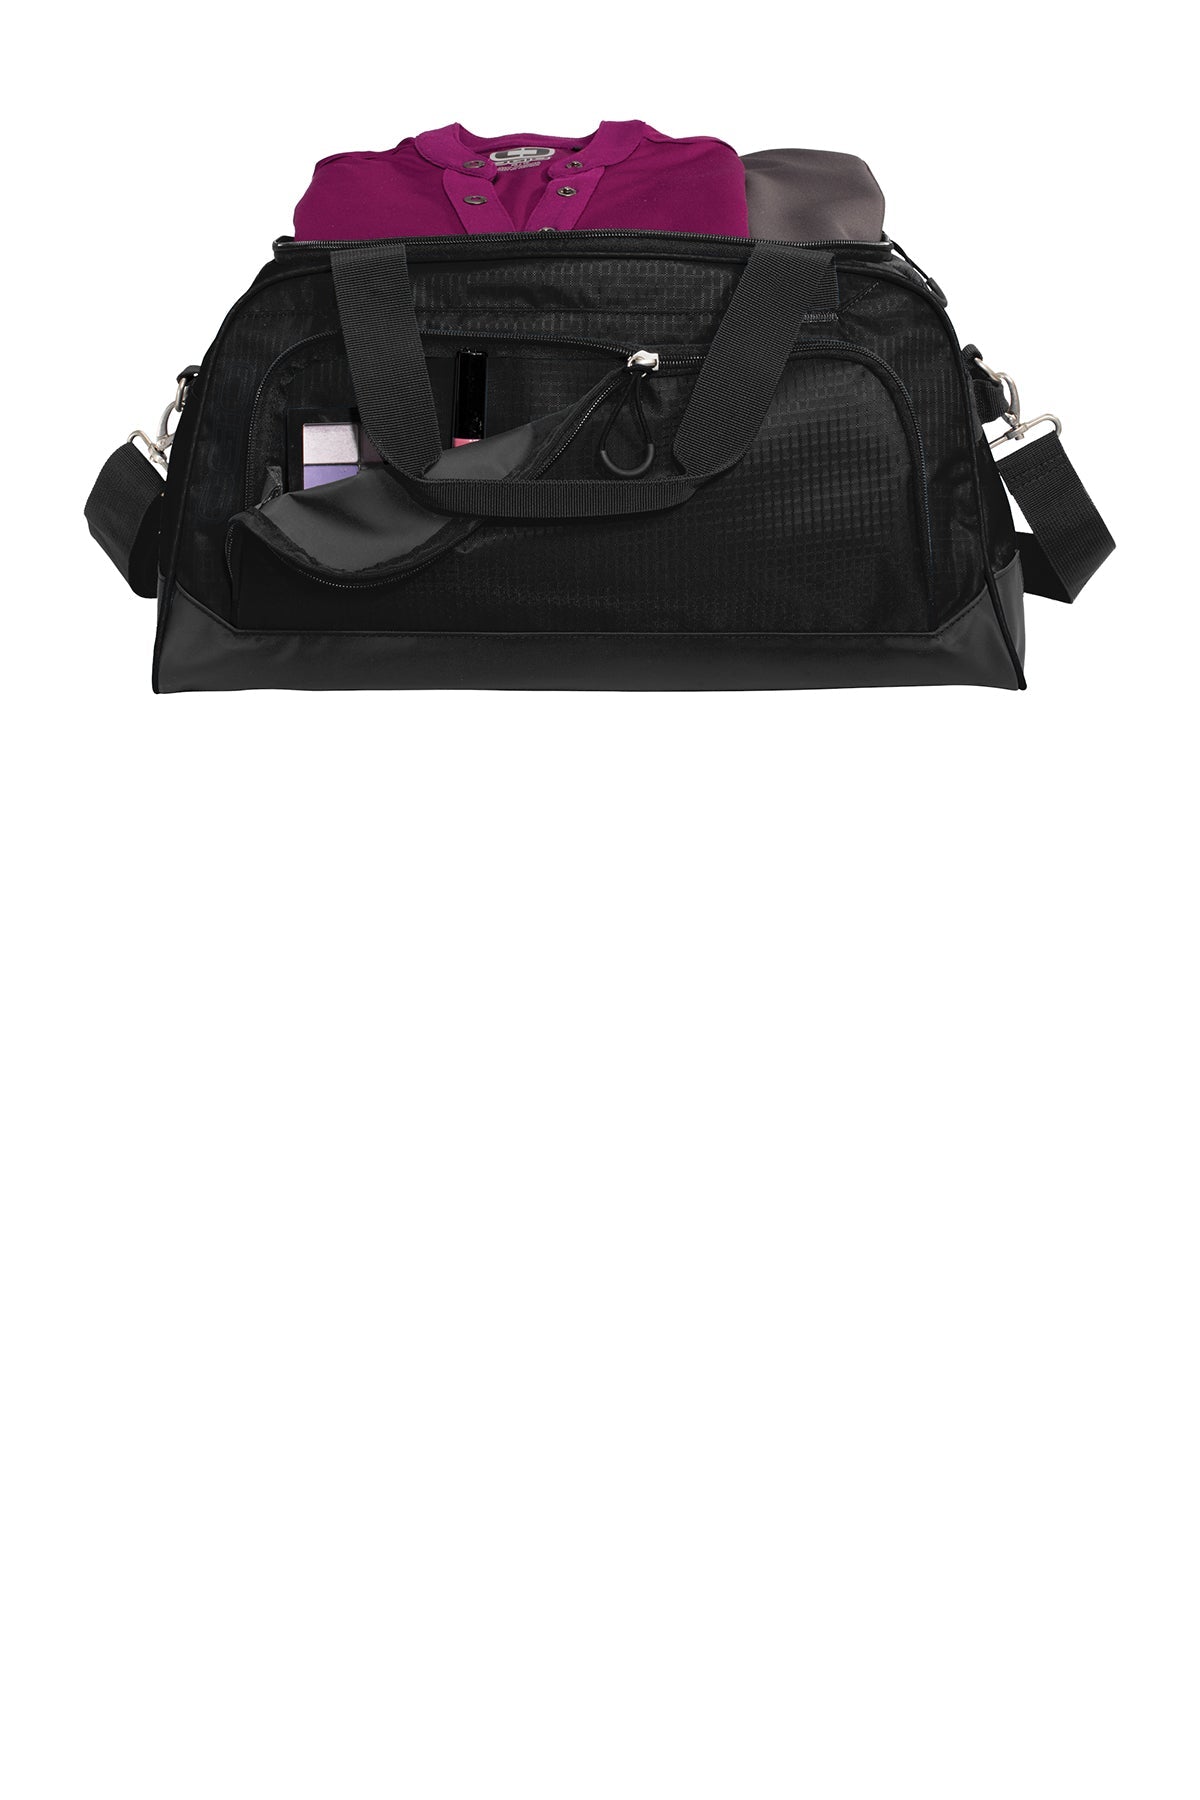 OGIO Breakaway Customized Duffel Bags, Black